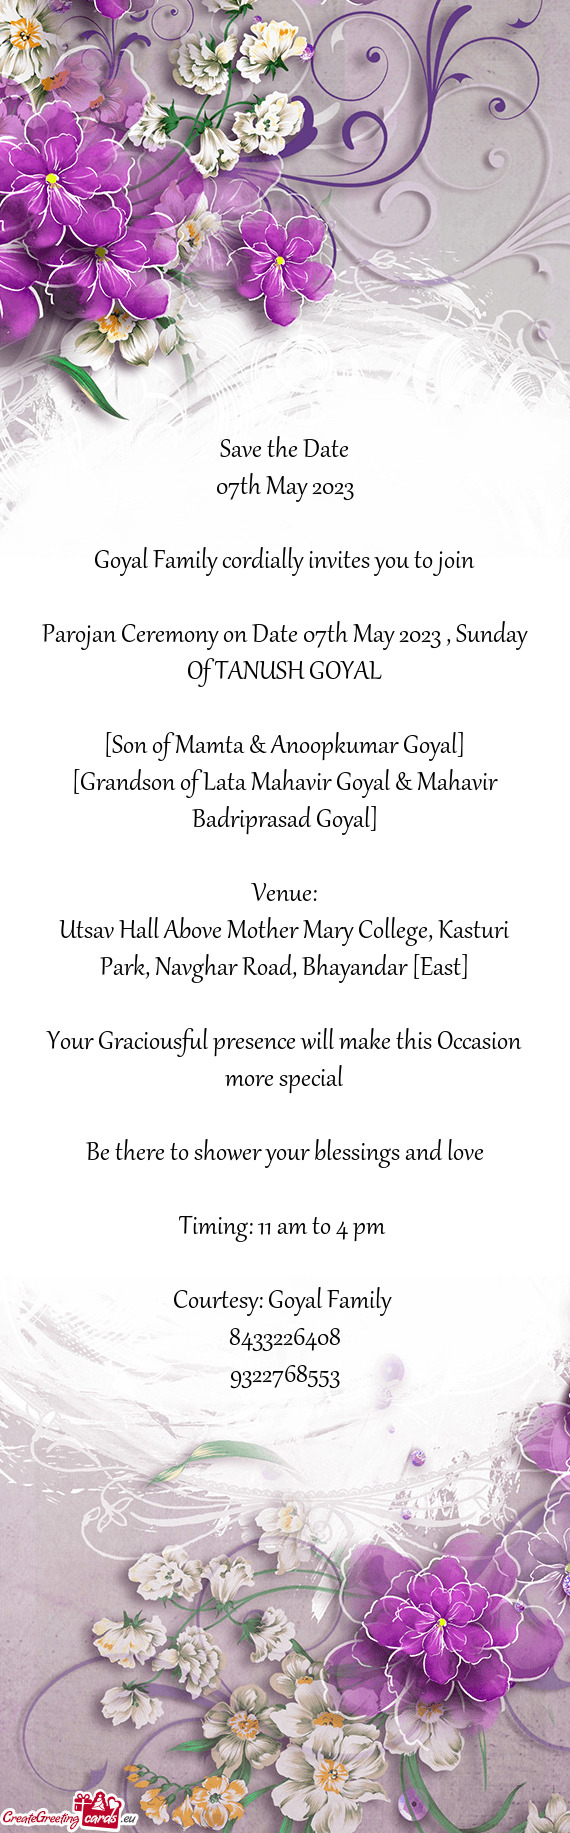 Parojan Ceremony on Date 07th May 2023 , Sunday - Free cards